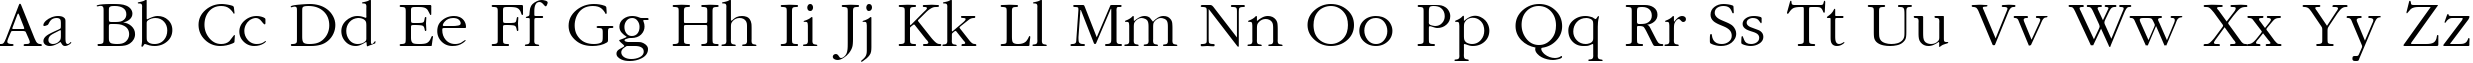 Пример написания английского алфавита шрифтом Garamond2 Cyrillic